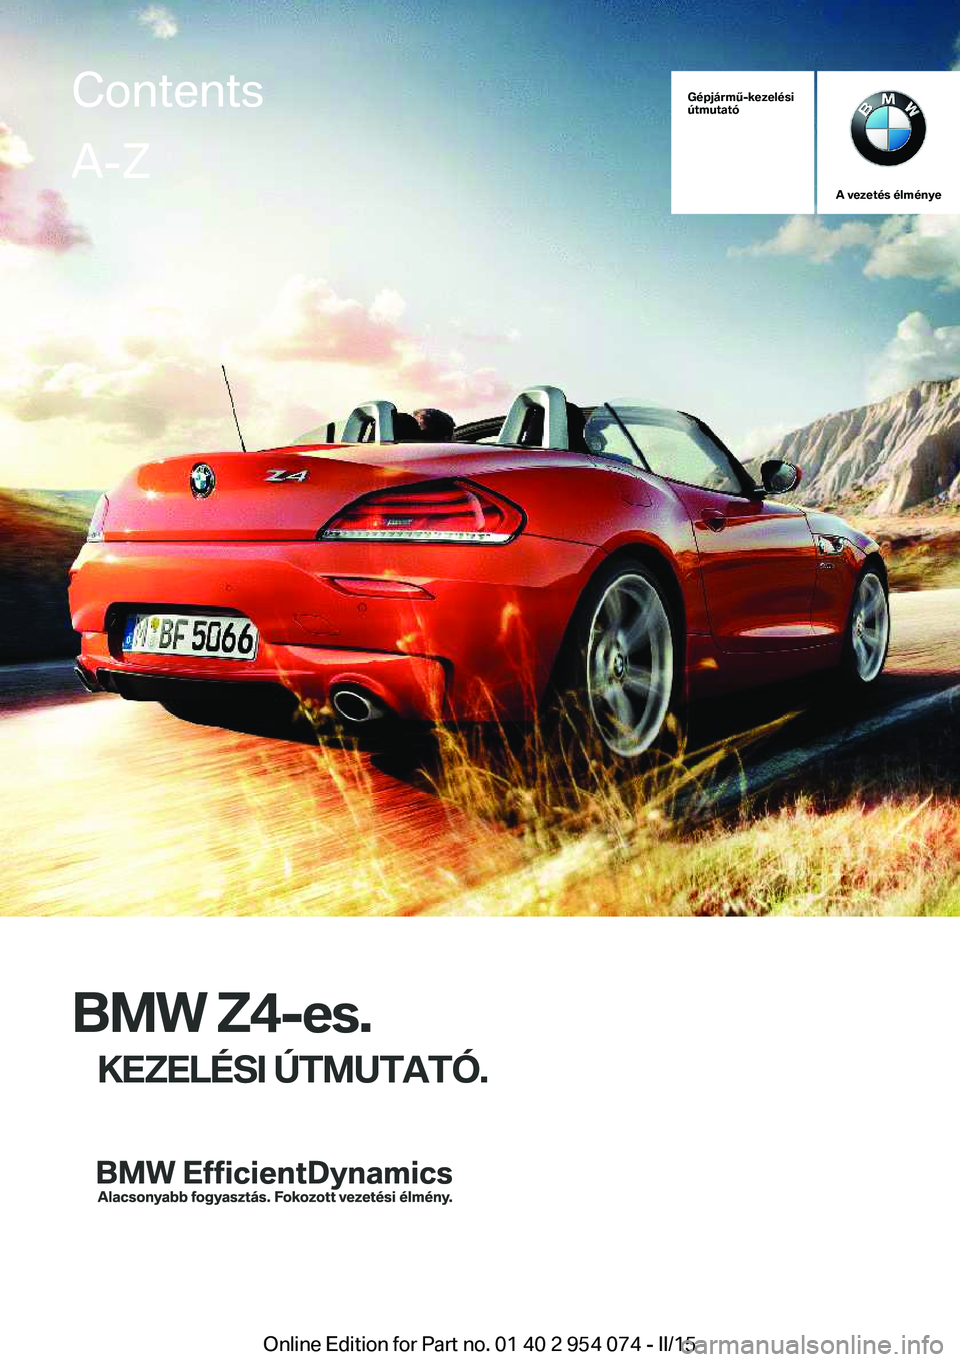 BMW Z4 2016  Kezelési útmutató (in Hungarian) Gépjármű-kezelési
útmutató
A vezetés élménye
BMW Z4-es.
KEZELÉSI ÚTMUTATÓ.
ContentsA-Z
Online Edition for Part no. 01 40 2 954 074 - II/15   